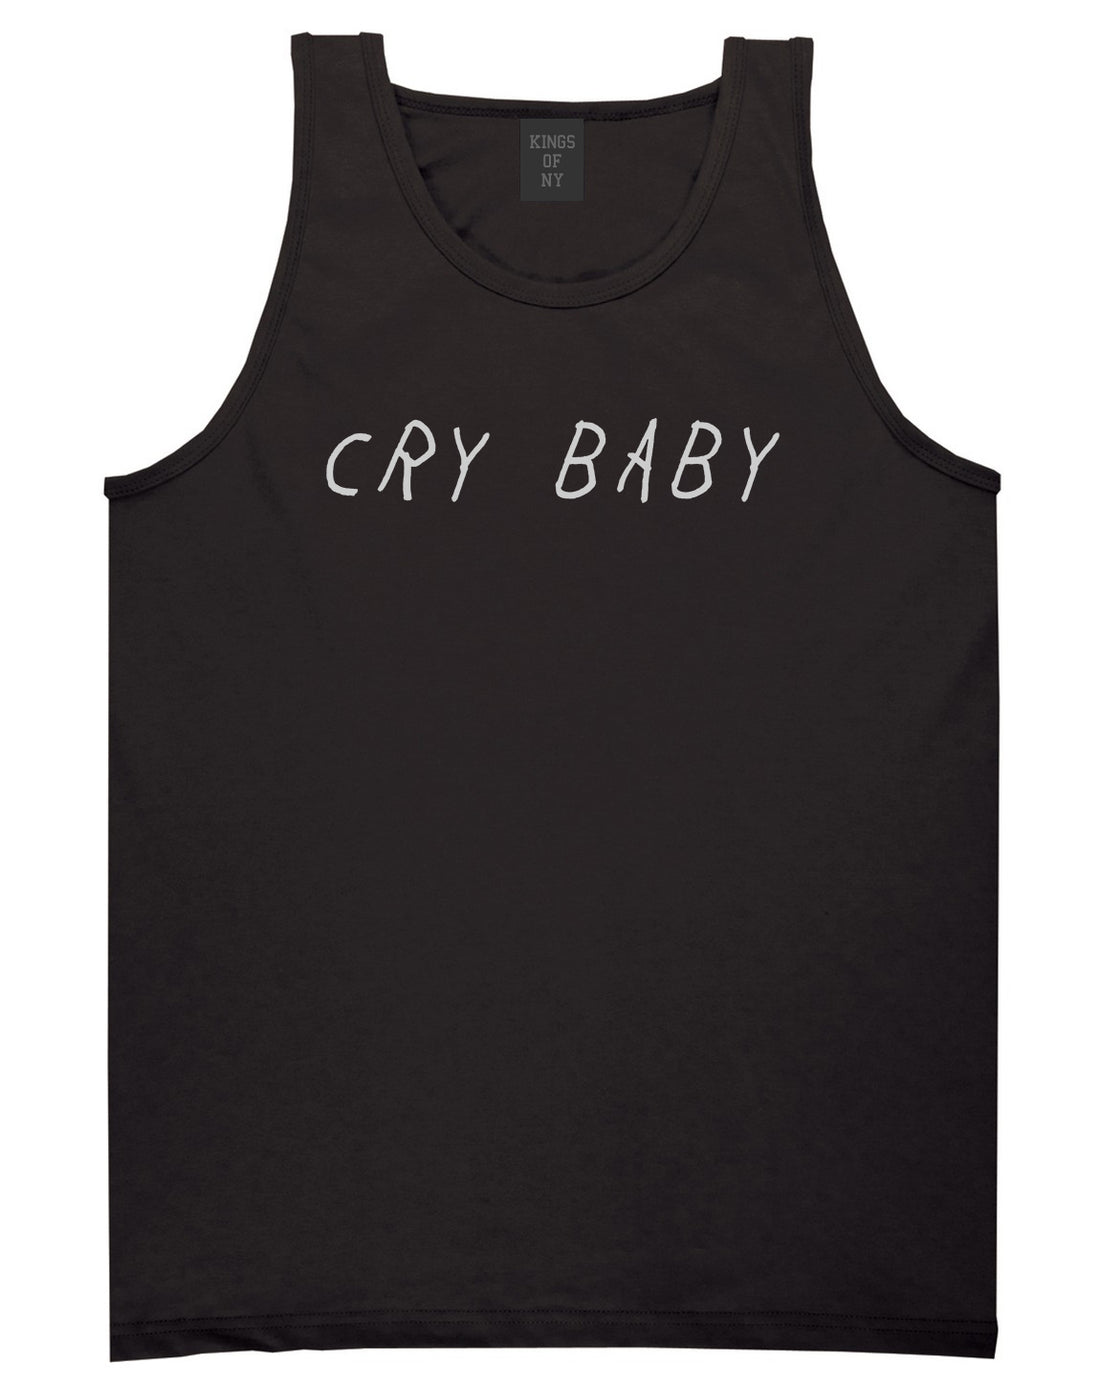 Cry_Baby Mens Black Tank Top Shirt by Kings Of NY